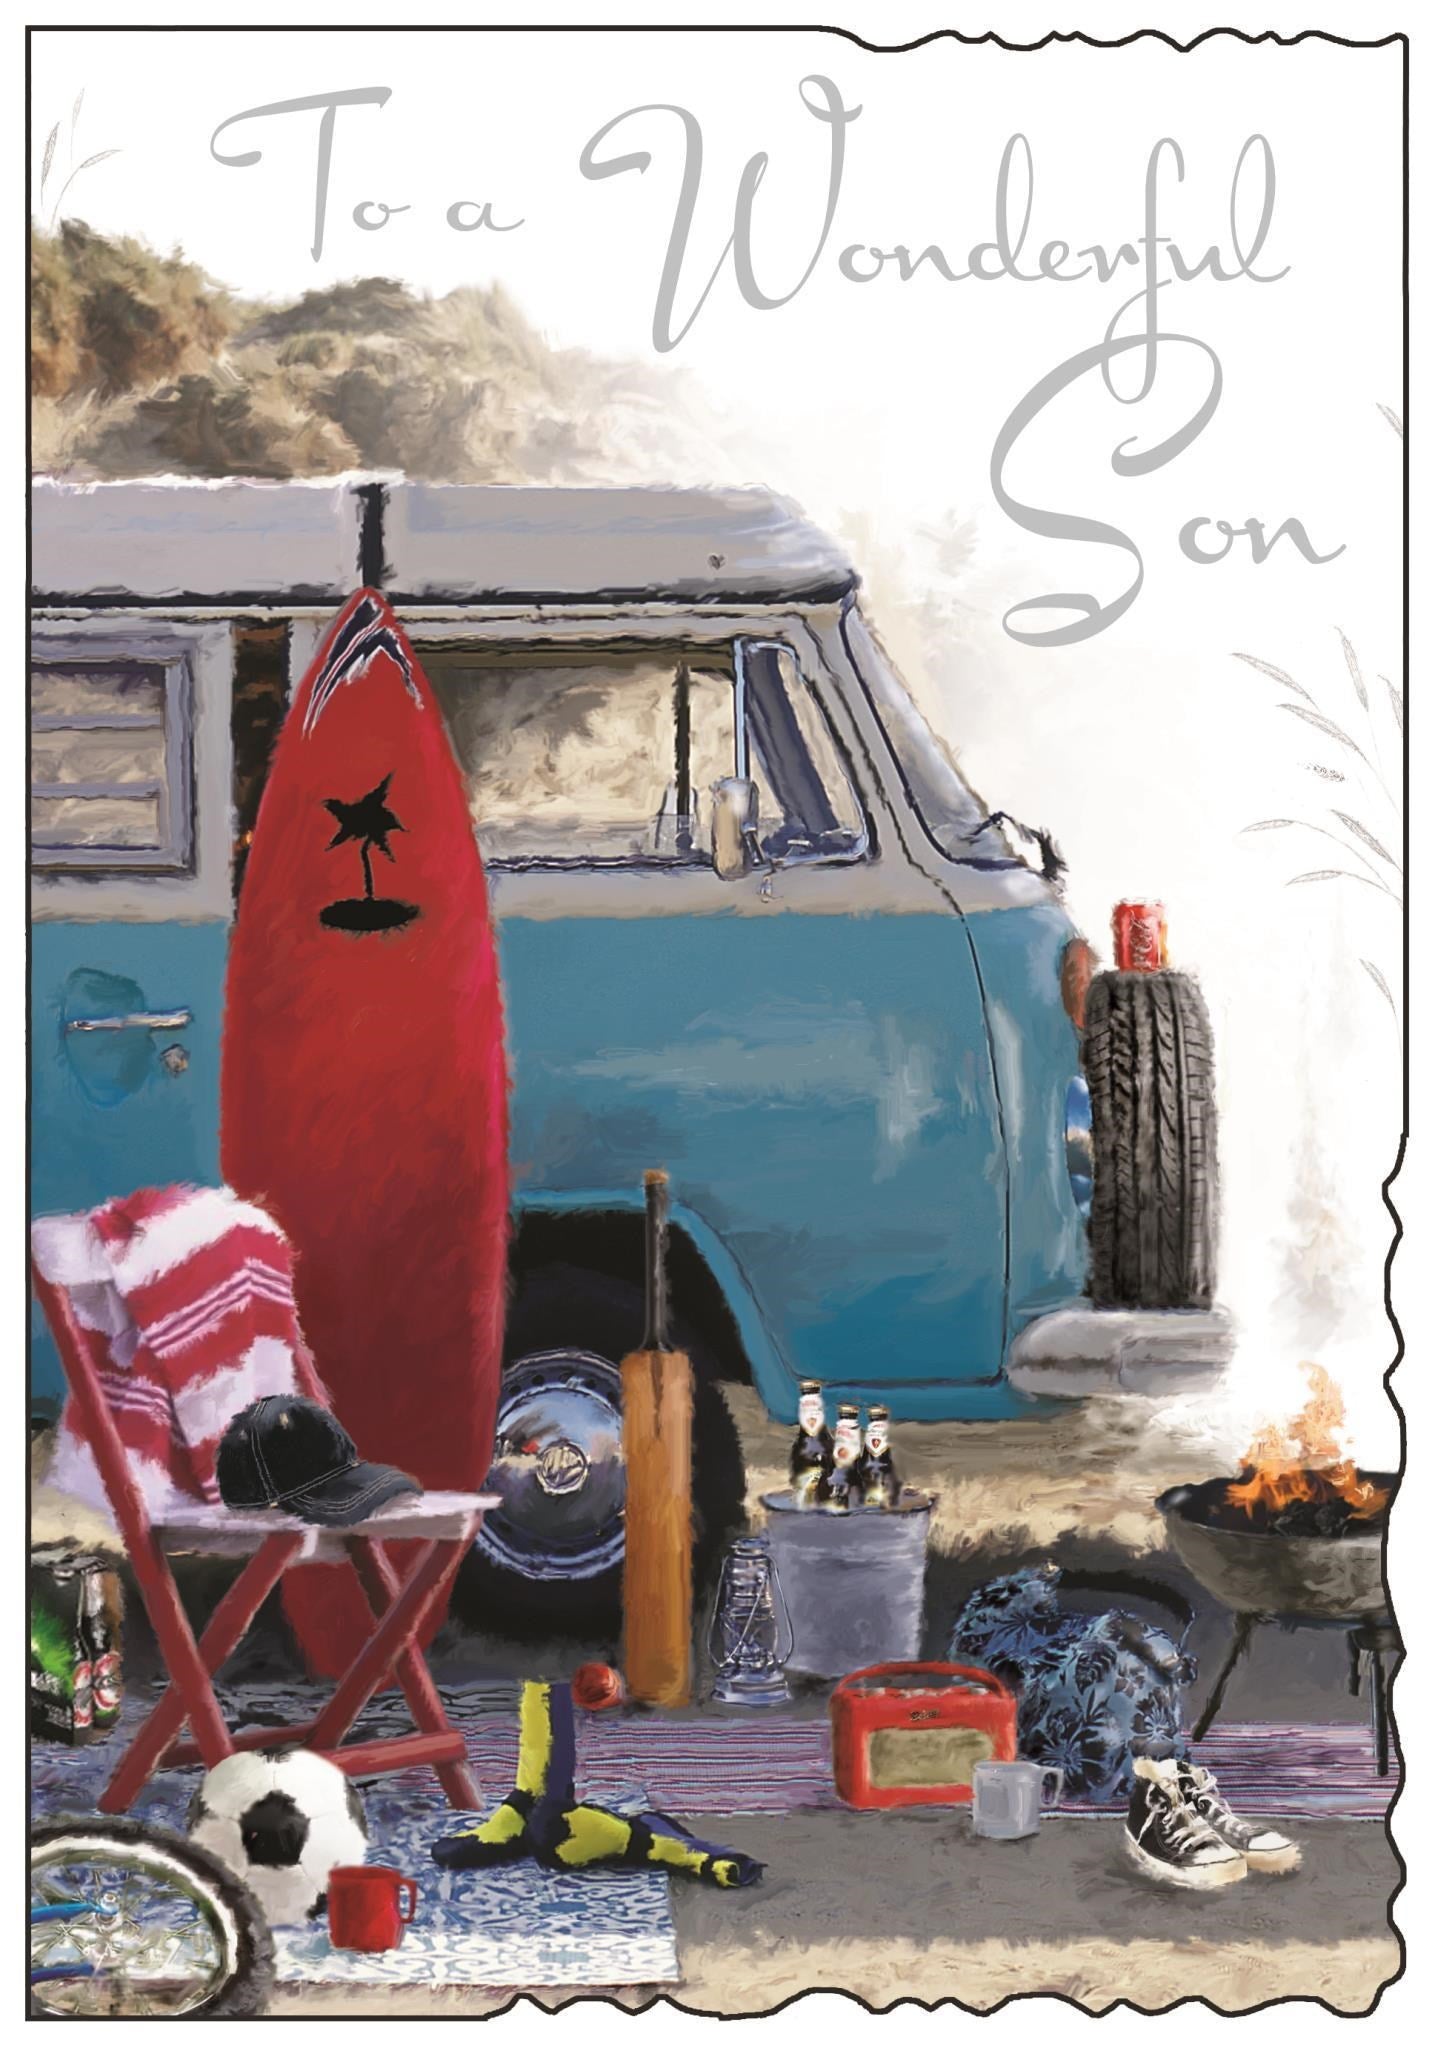 Son Birthday Card - Freedom Of A Campervan